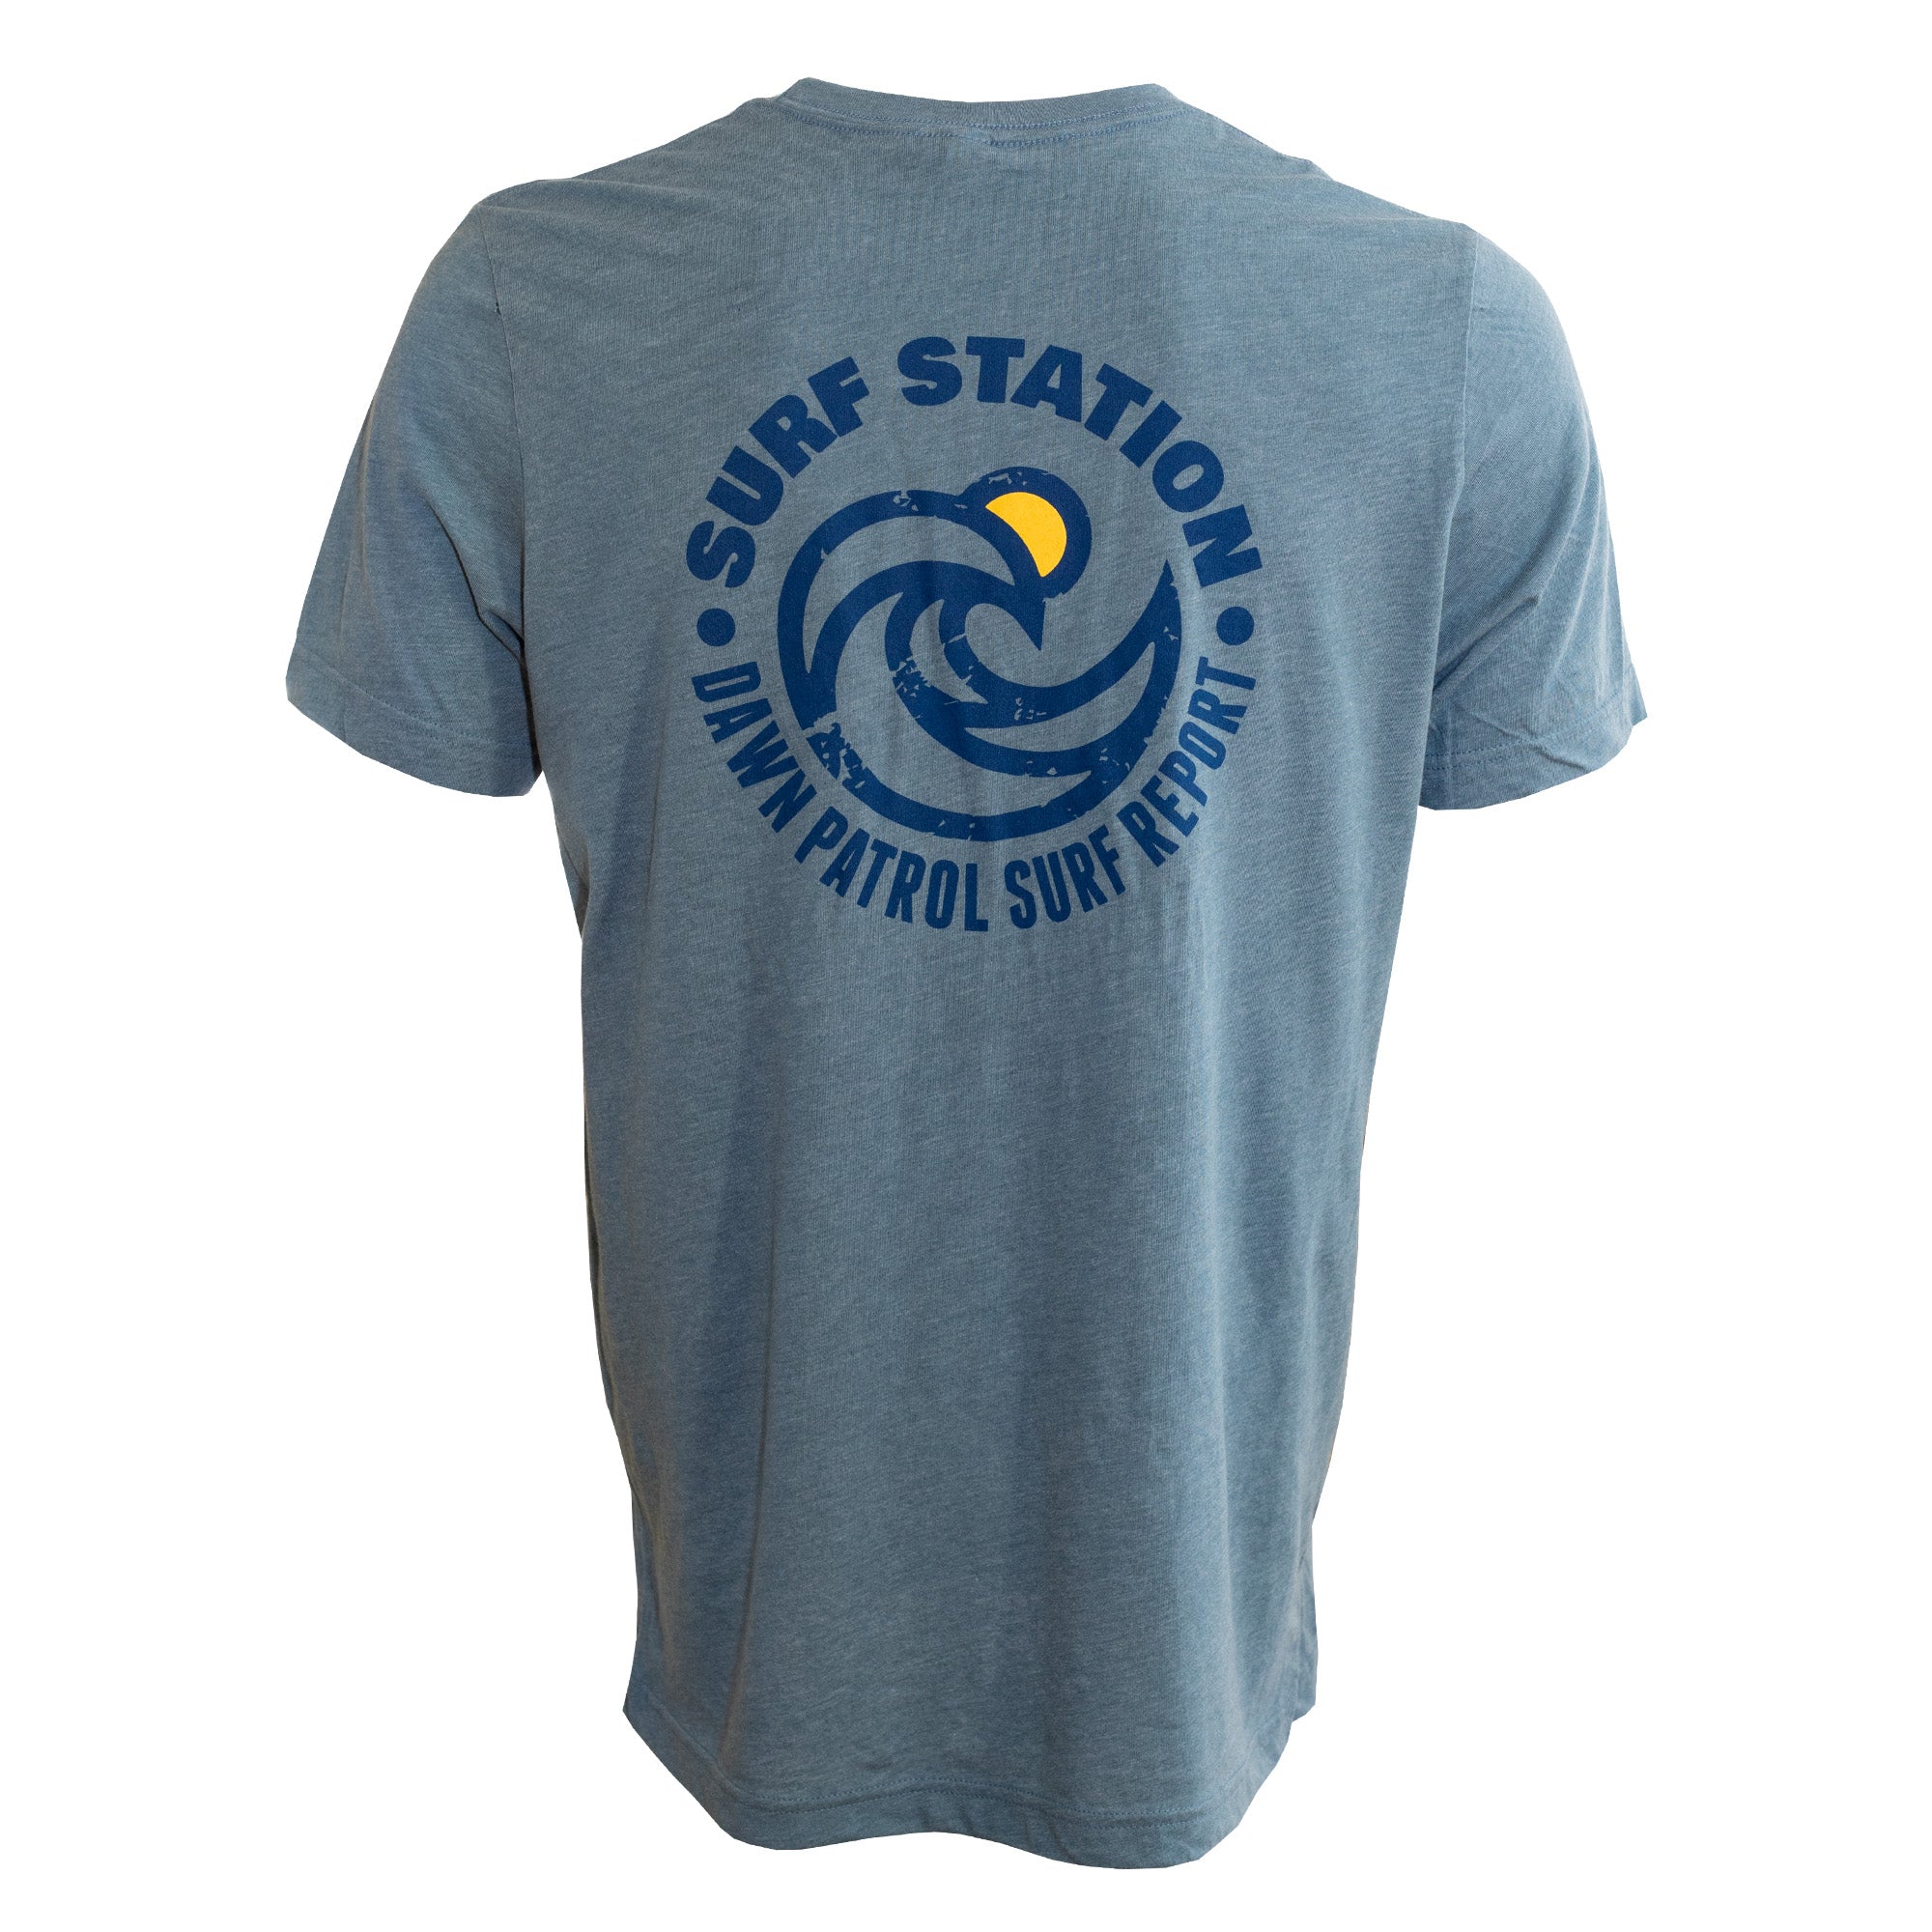 Surf Station Dawn Patrol Men's S/S T-Shirt